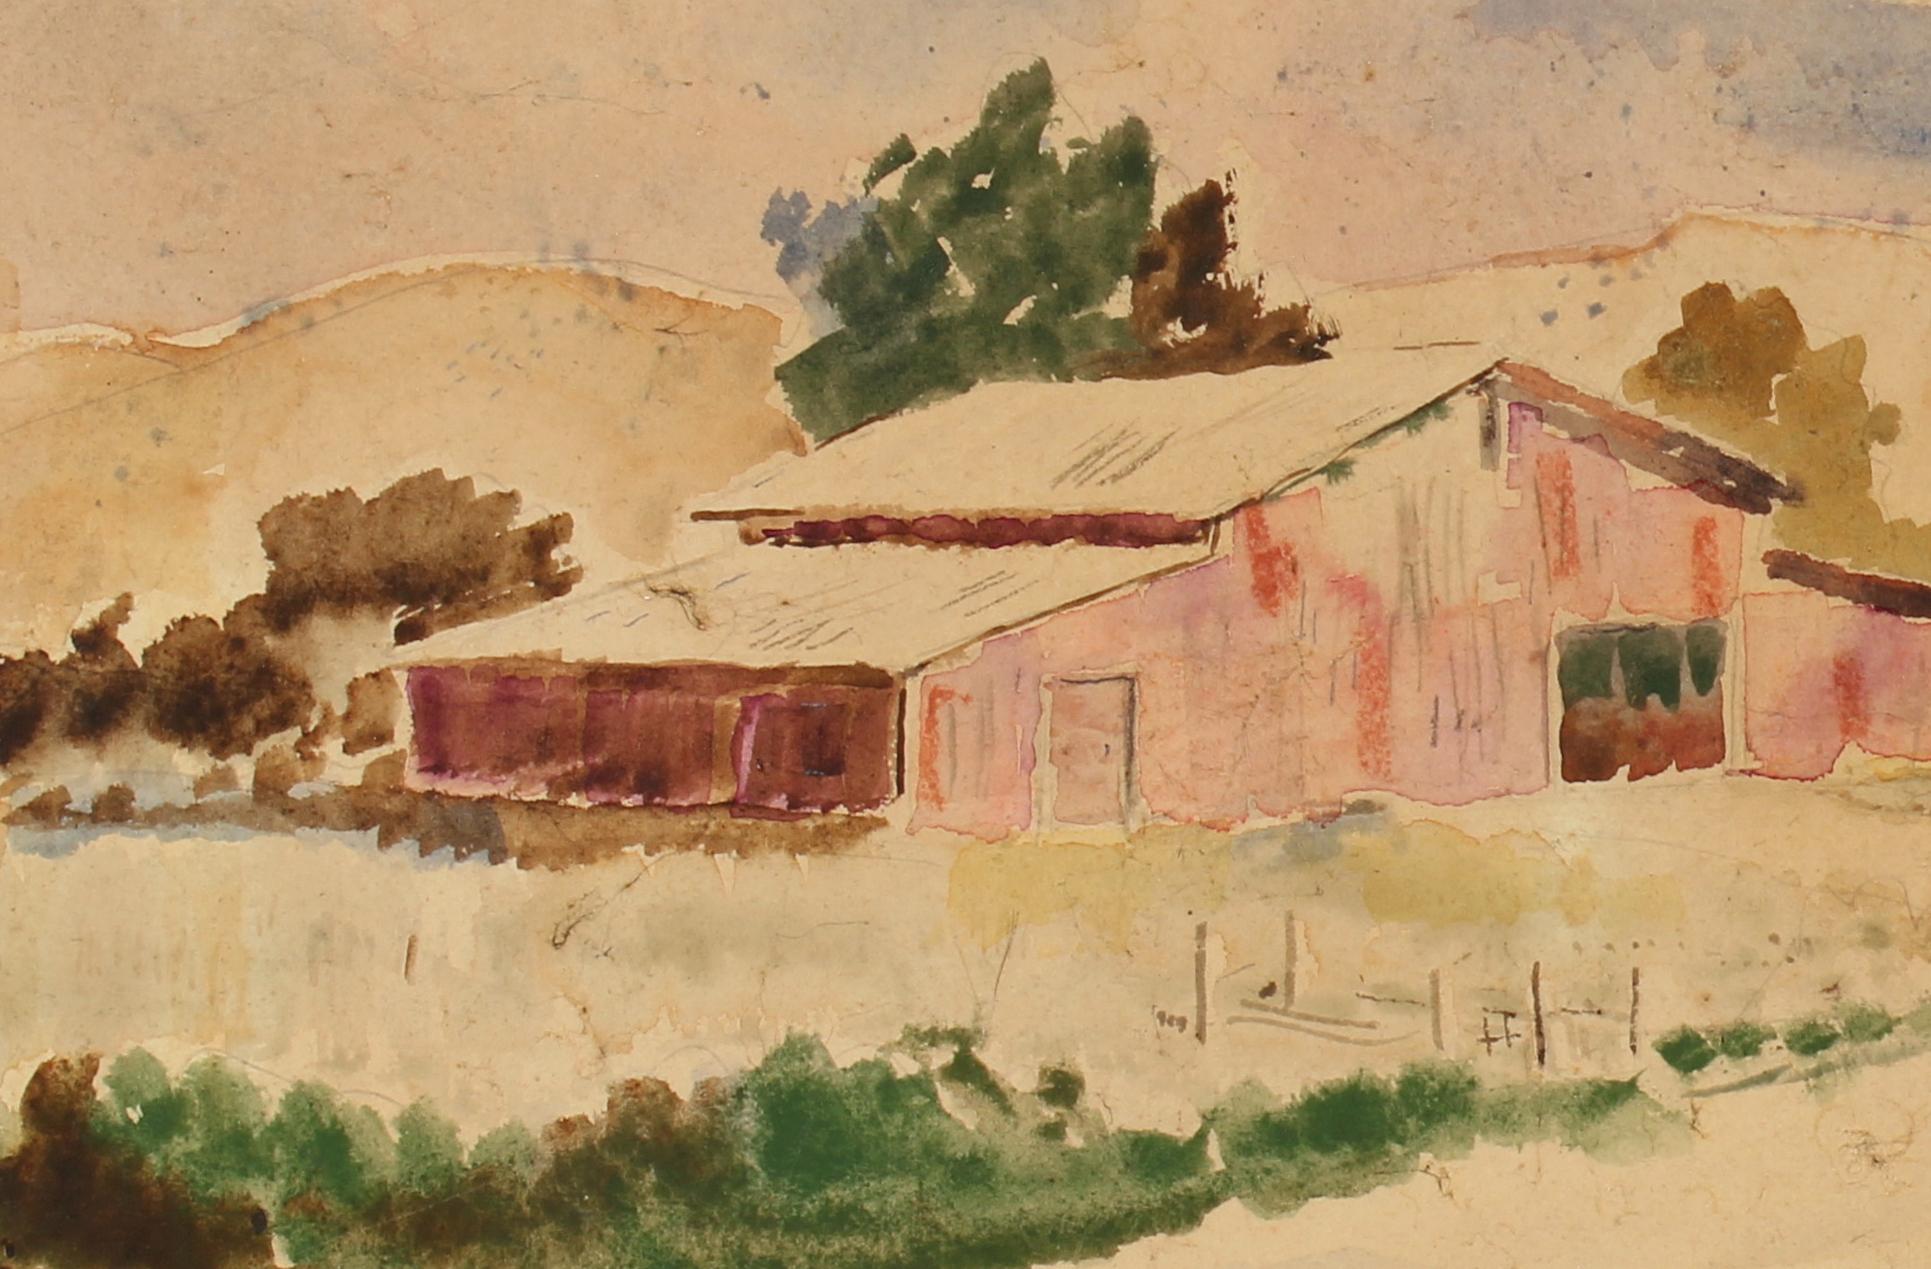 Forrest Hibbits Landscape Art - "The Old Ranch" Mid Century Oil & Graphite Landscape